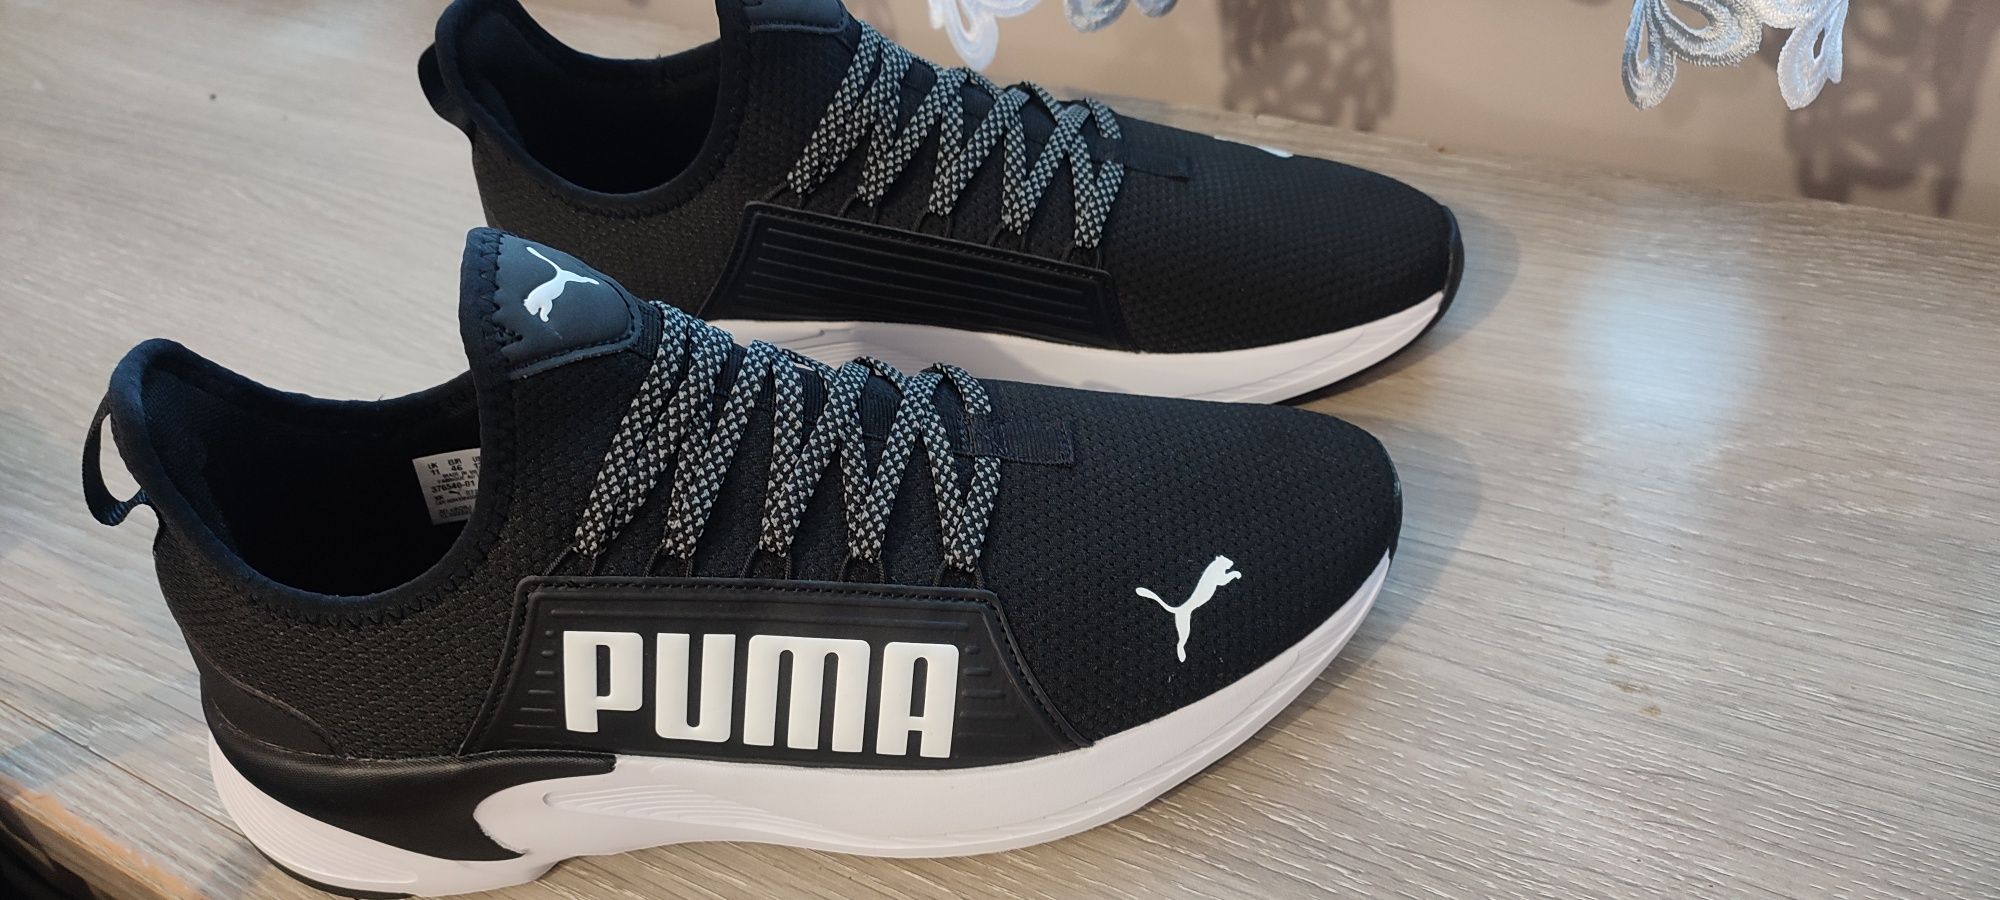 Buty  Puma  nowe